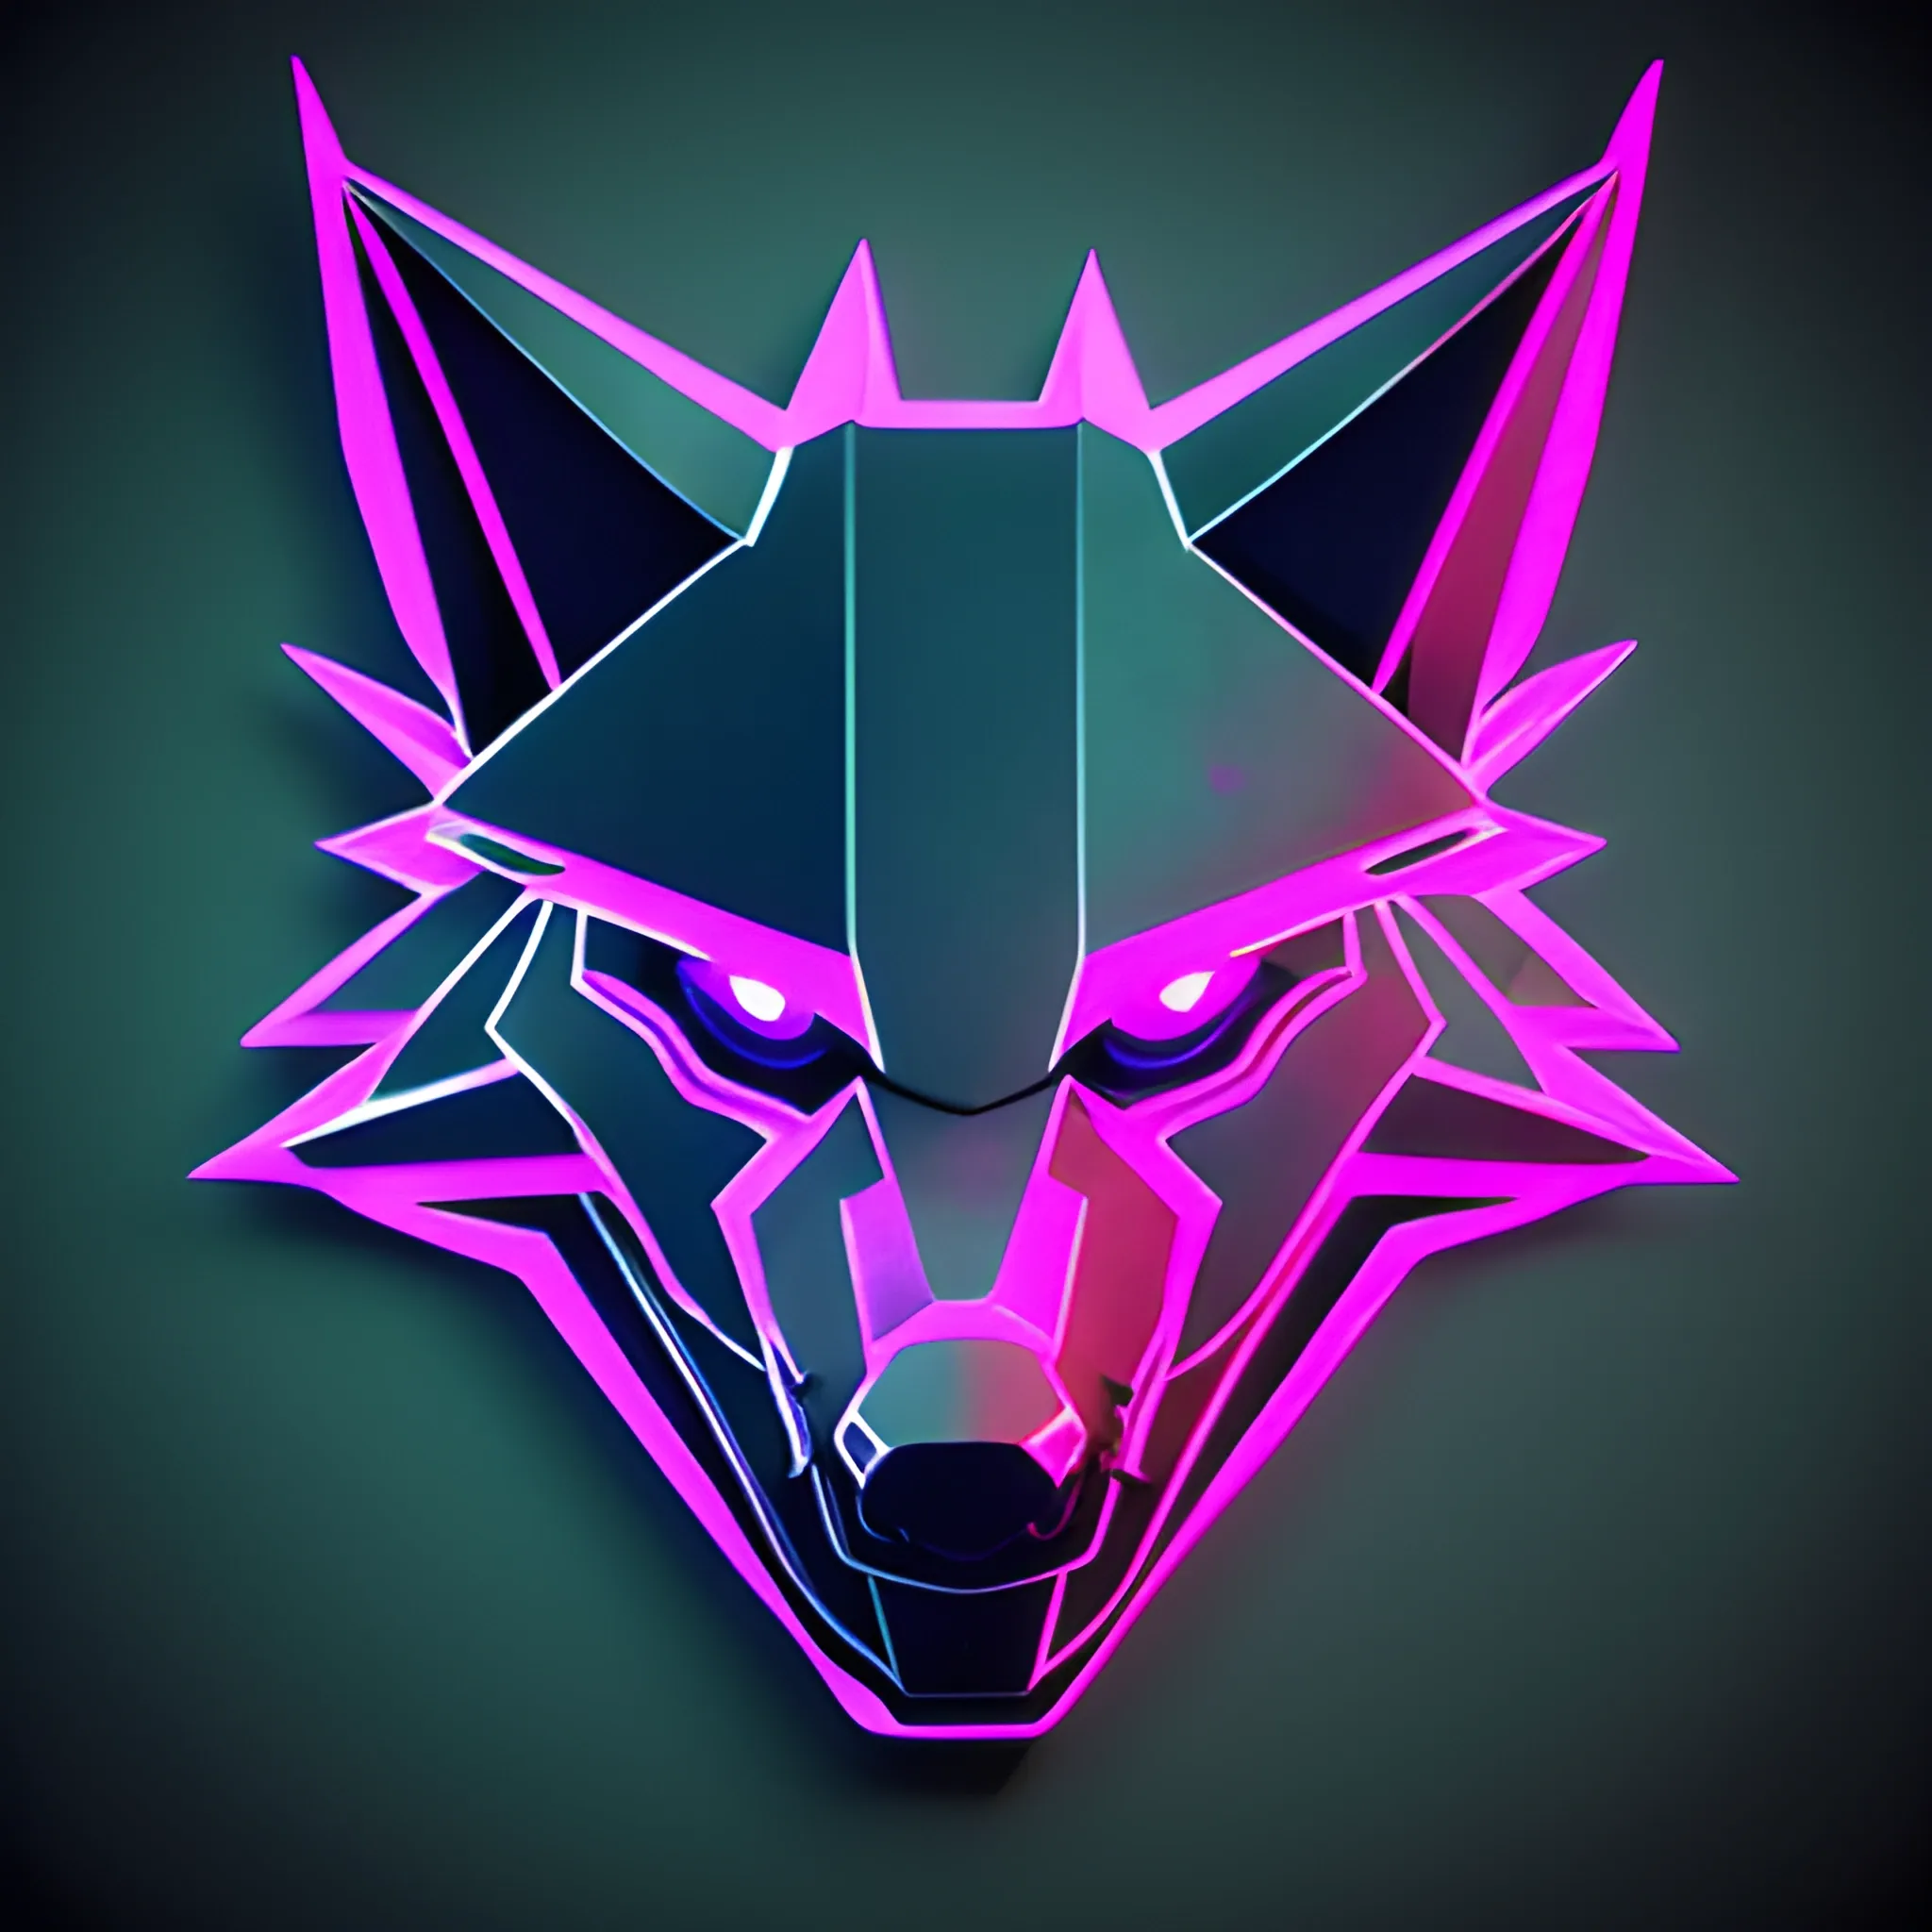 Cyberpunk lone angry wolf  logo 
, 3D, Cartoon, Trippy